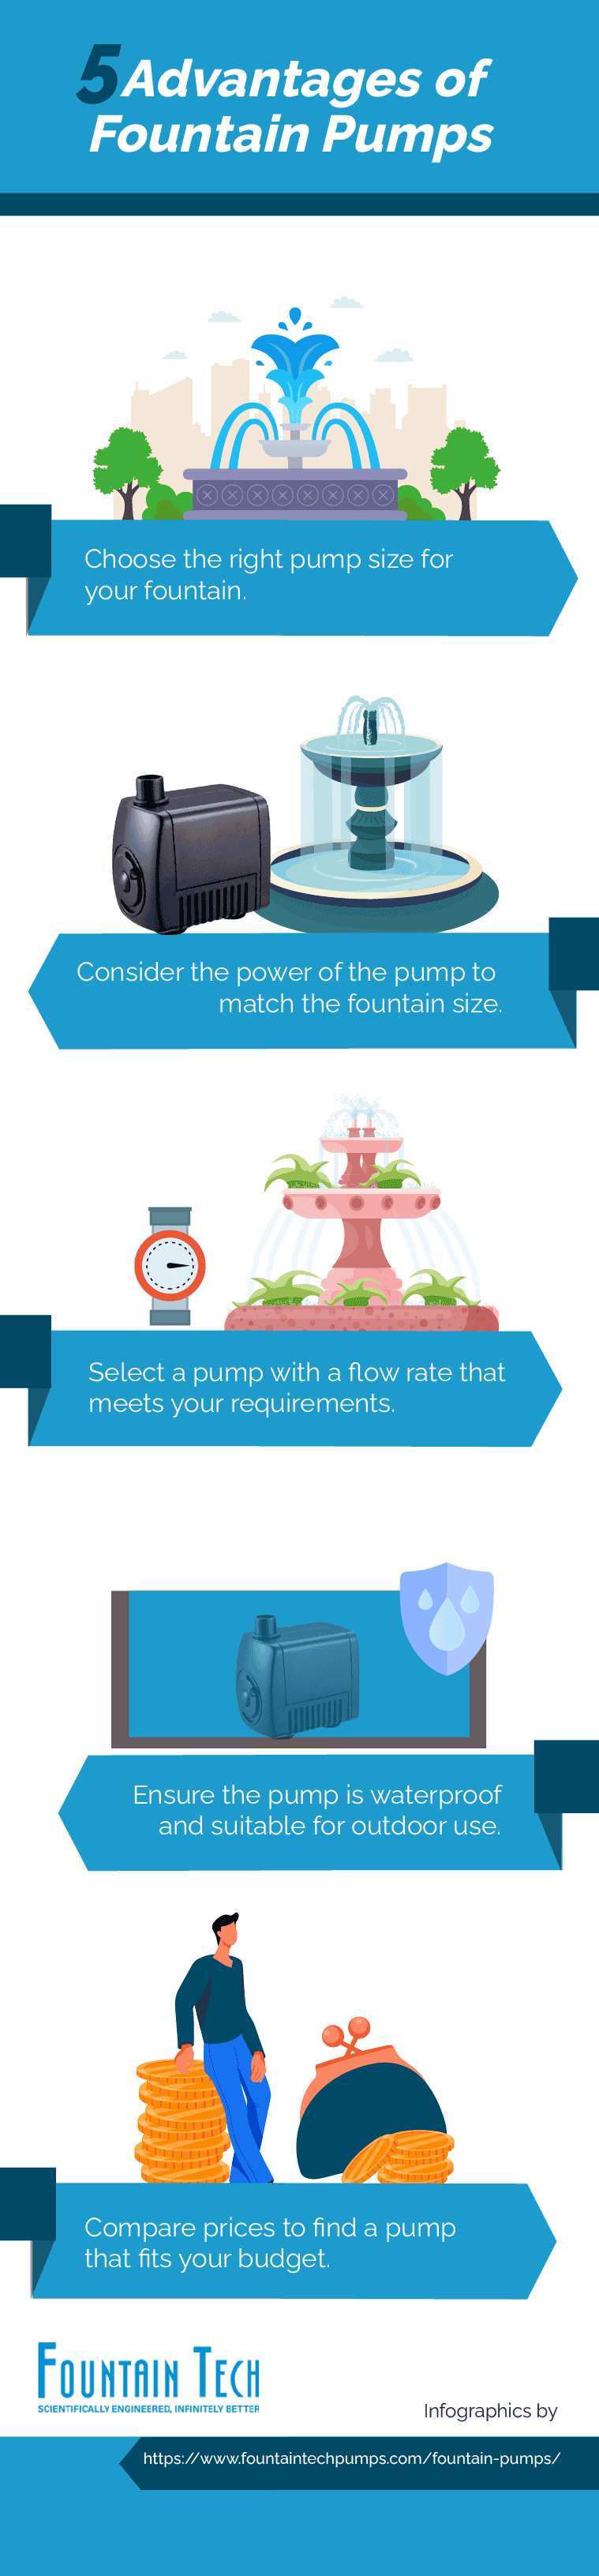 Advantages of Fountain Pumps